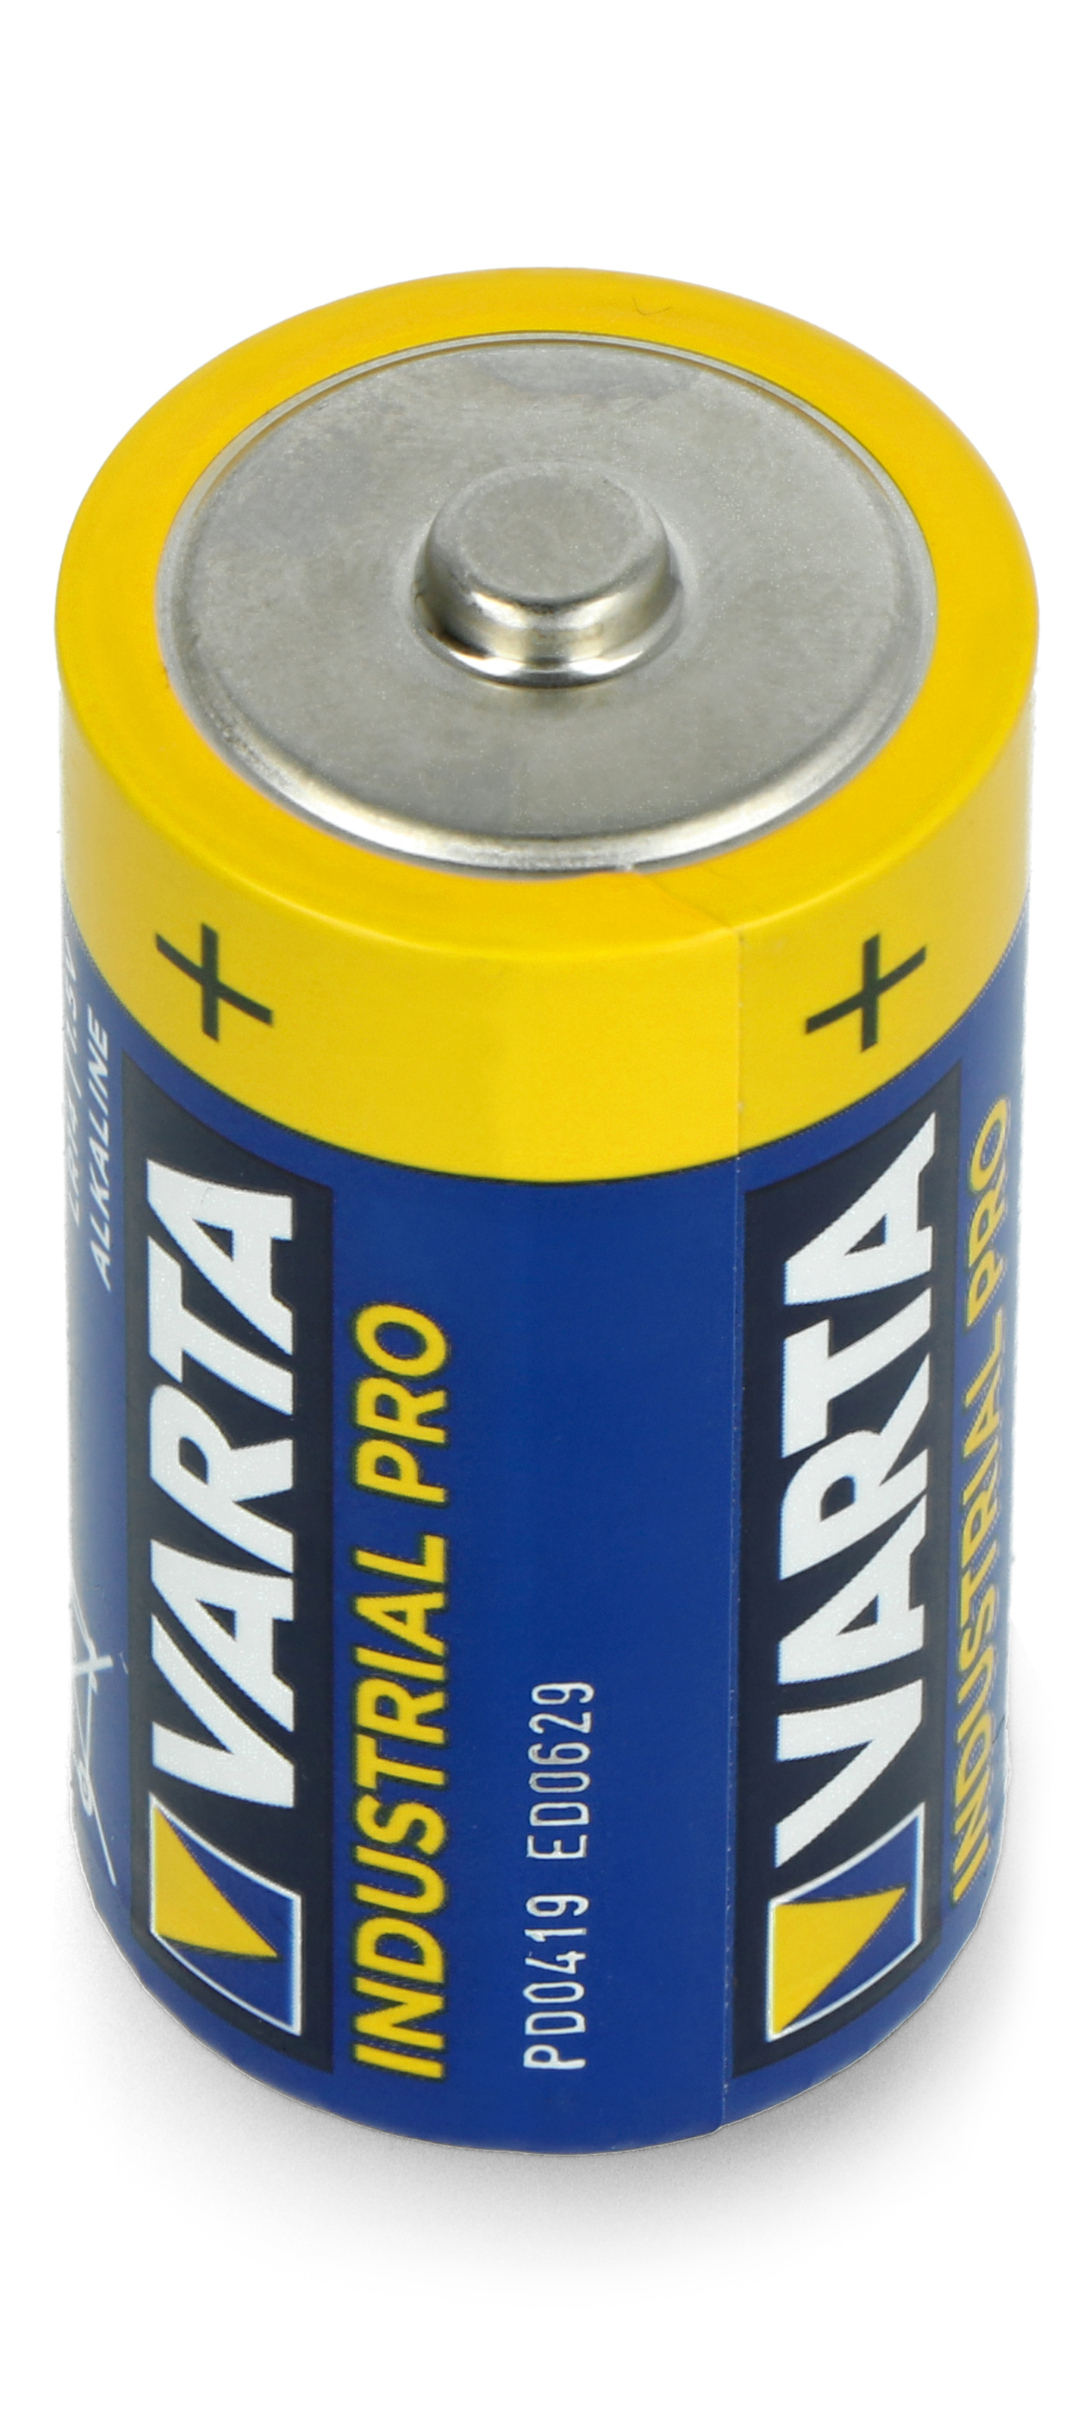 VARTA Batterien C Baby, 20 Stück, Industrial Pro, Alkaline